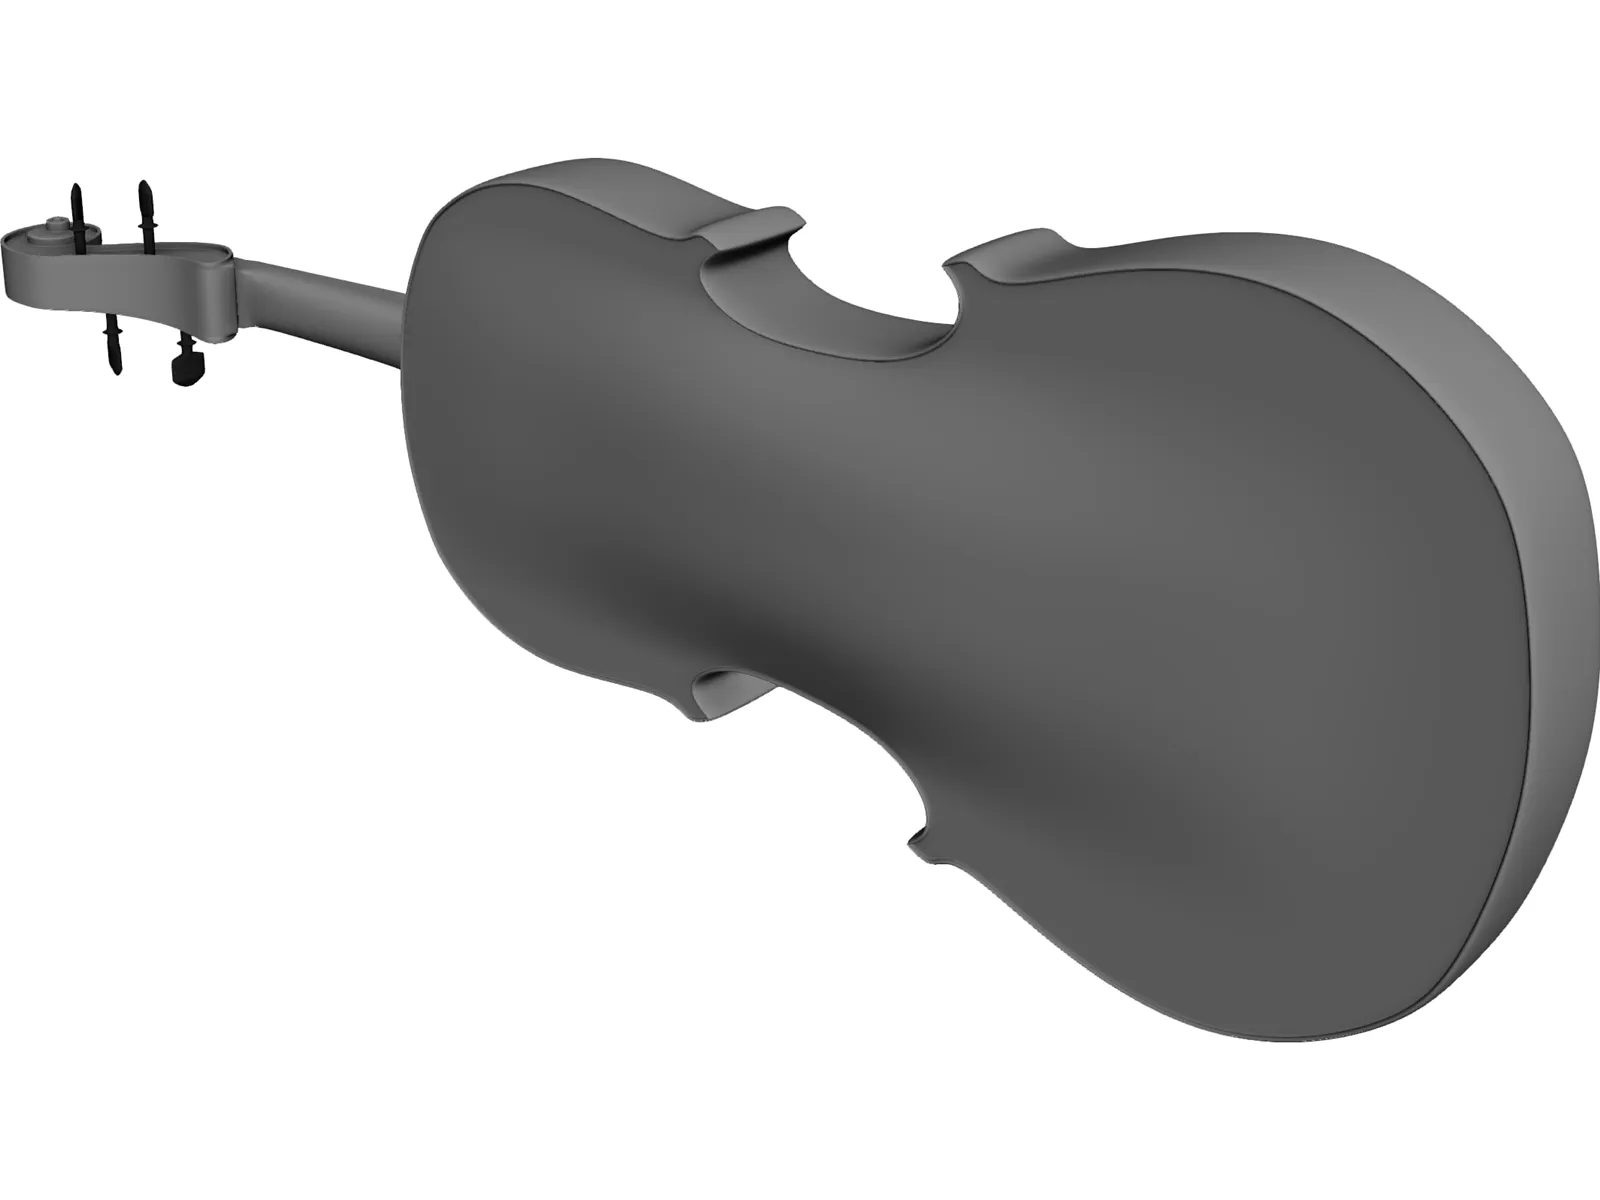 Violin Traditional 3D Model